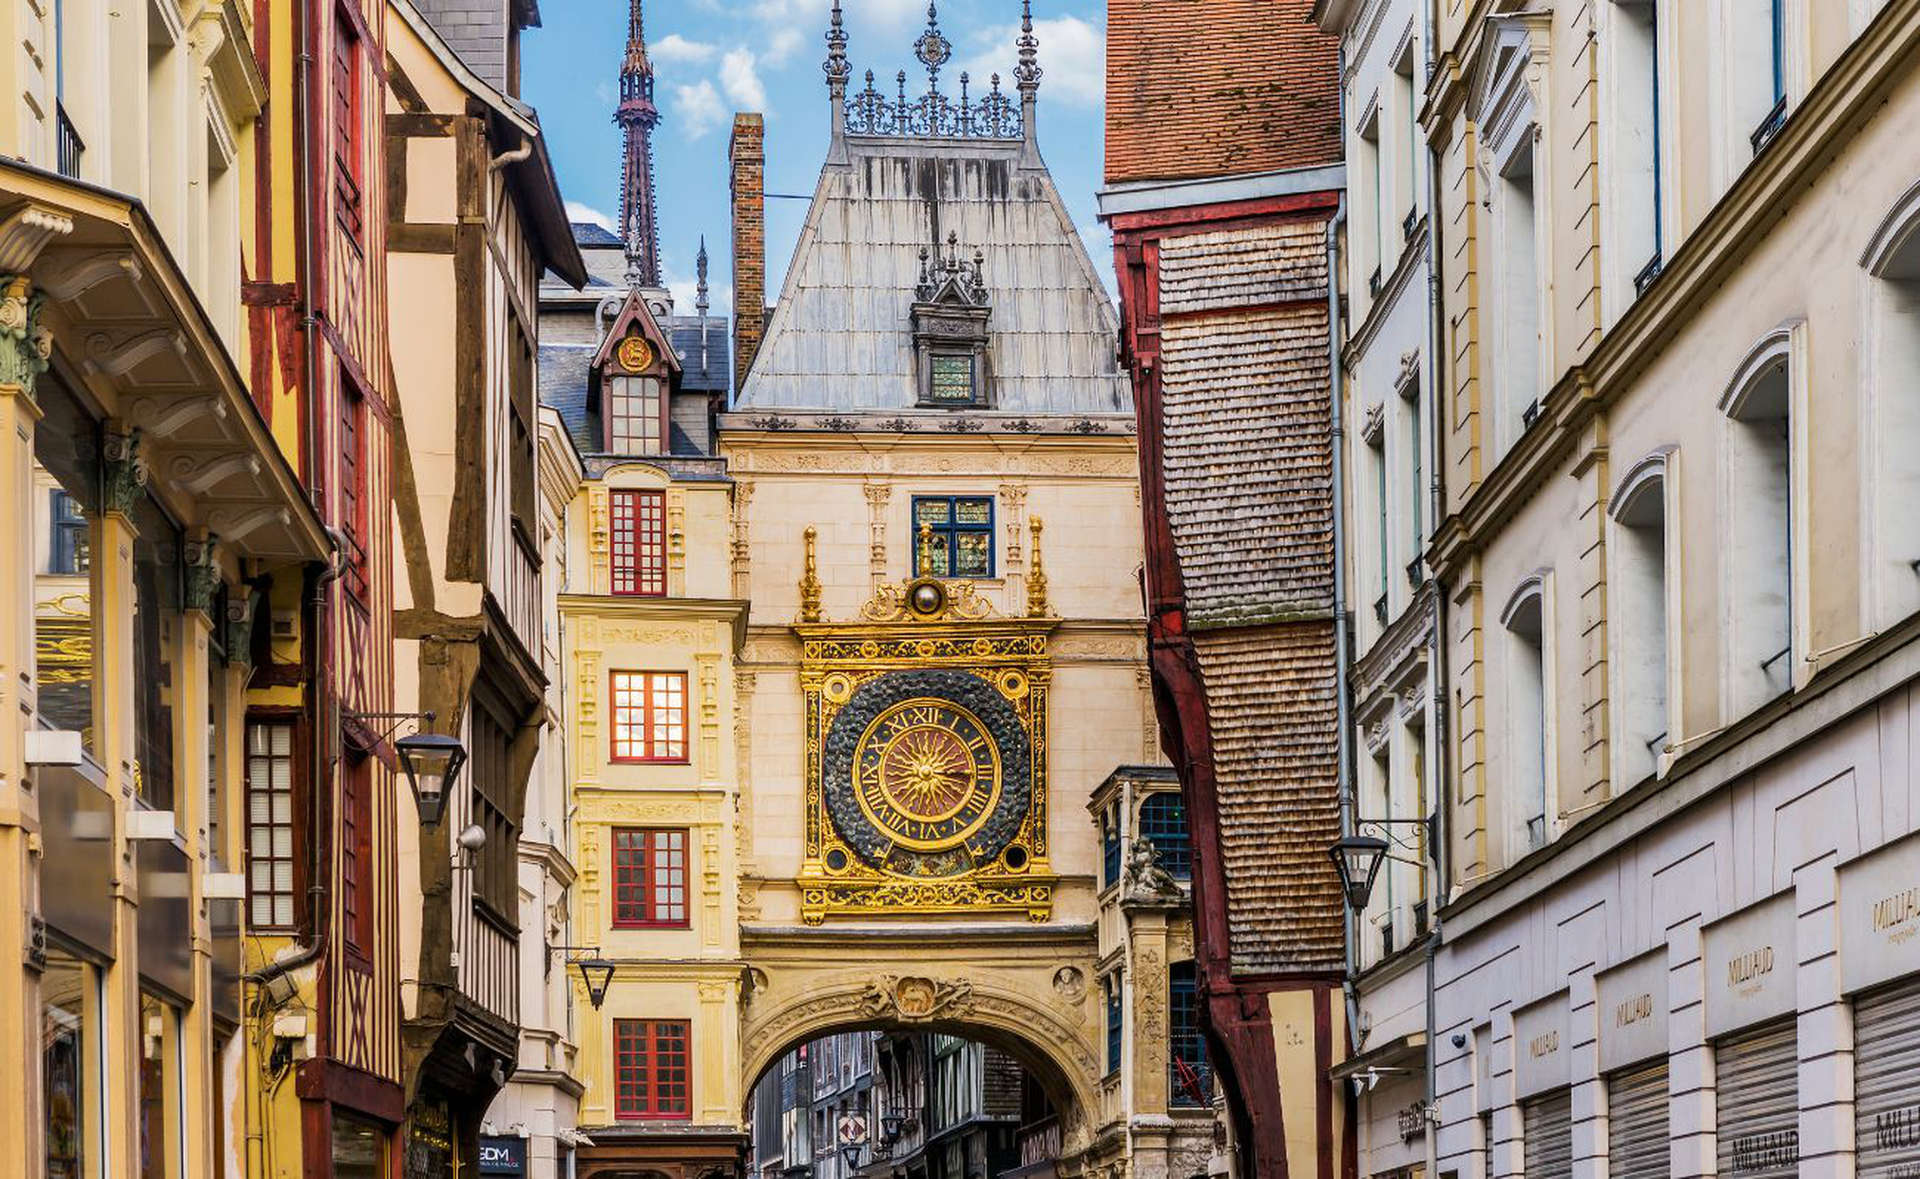 The Gros Horloge, Rouen, France